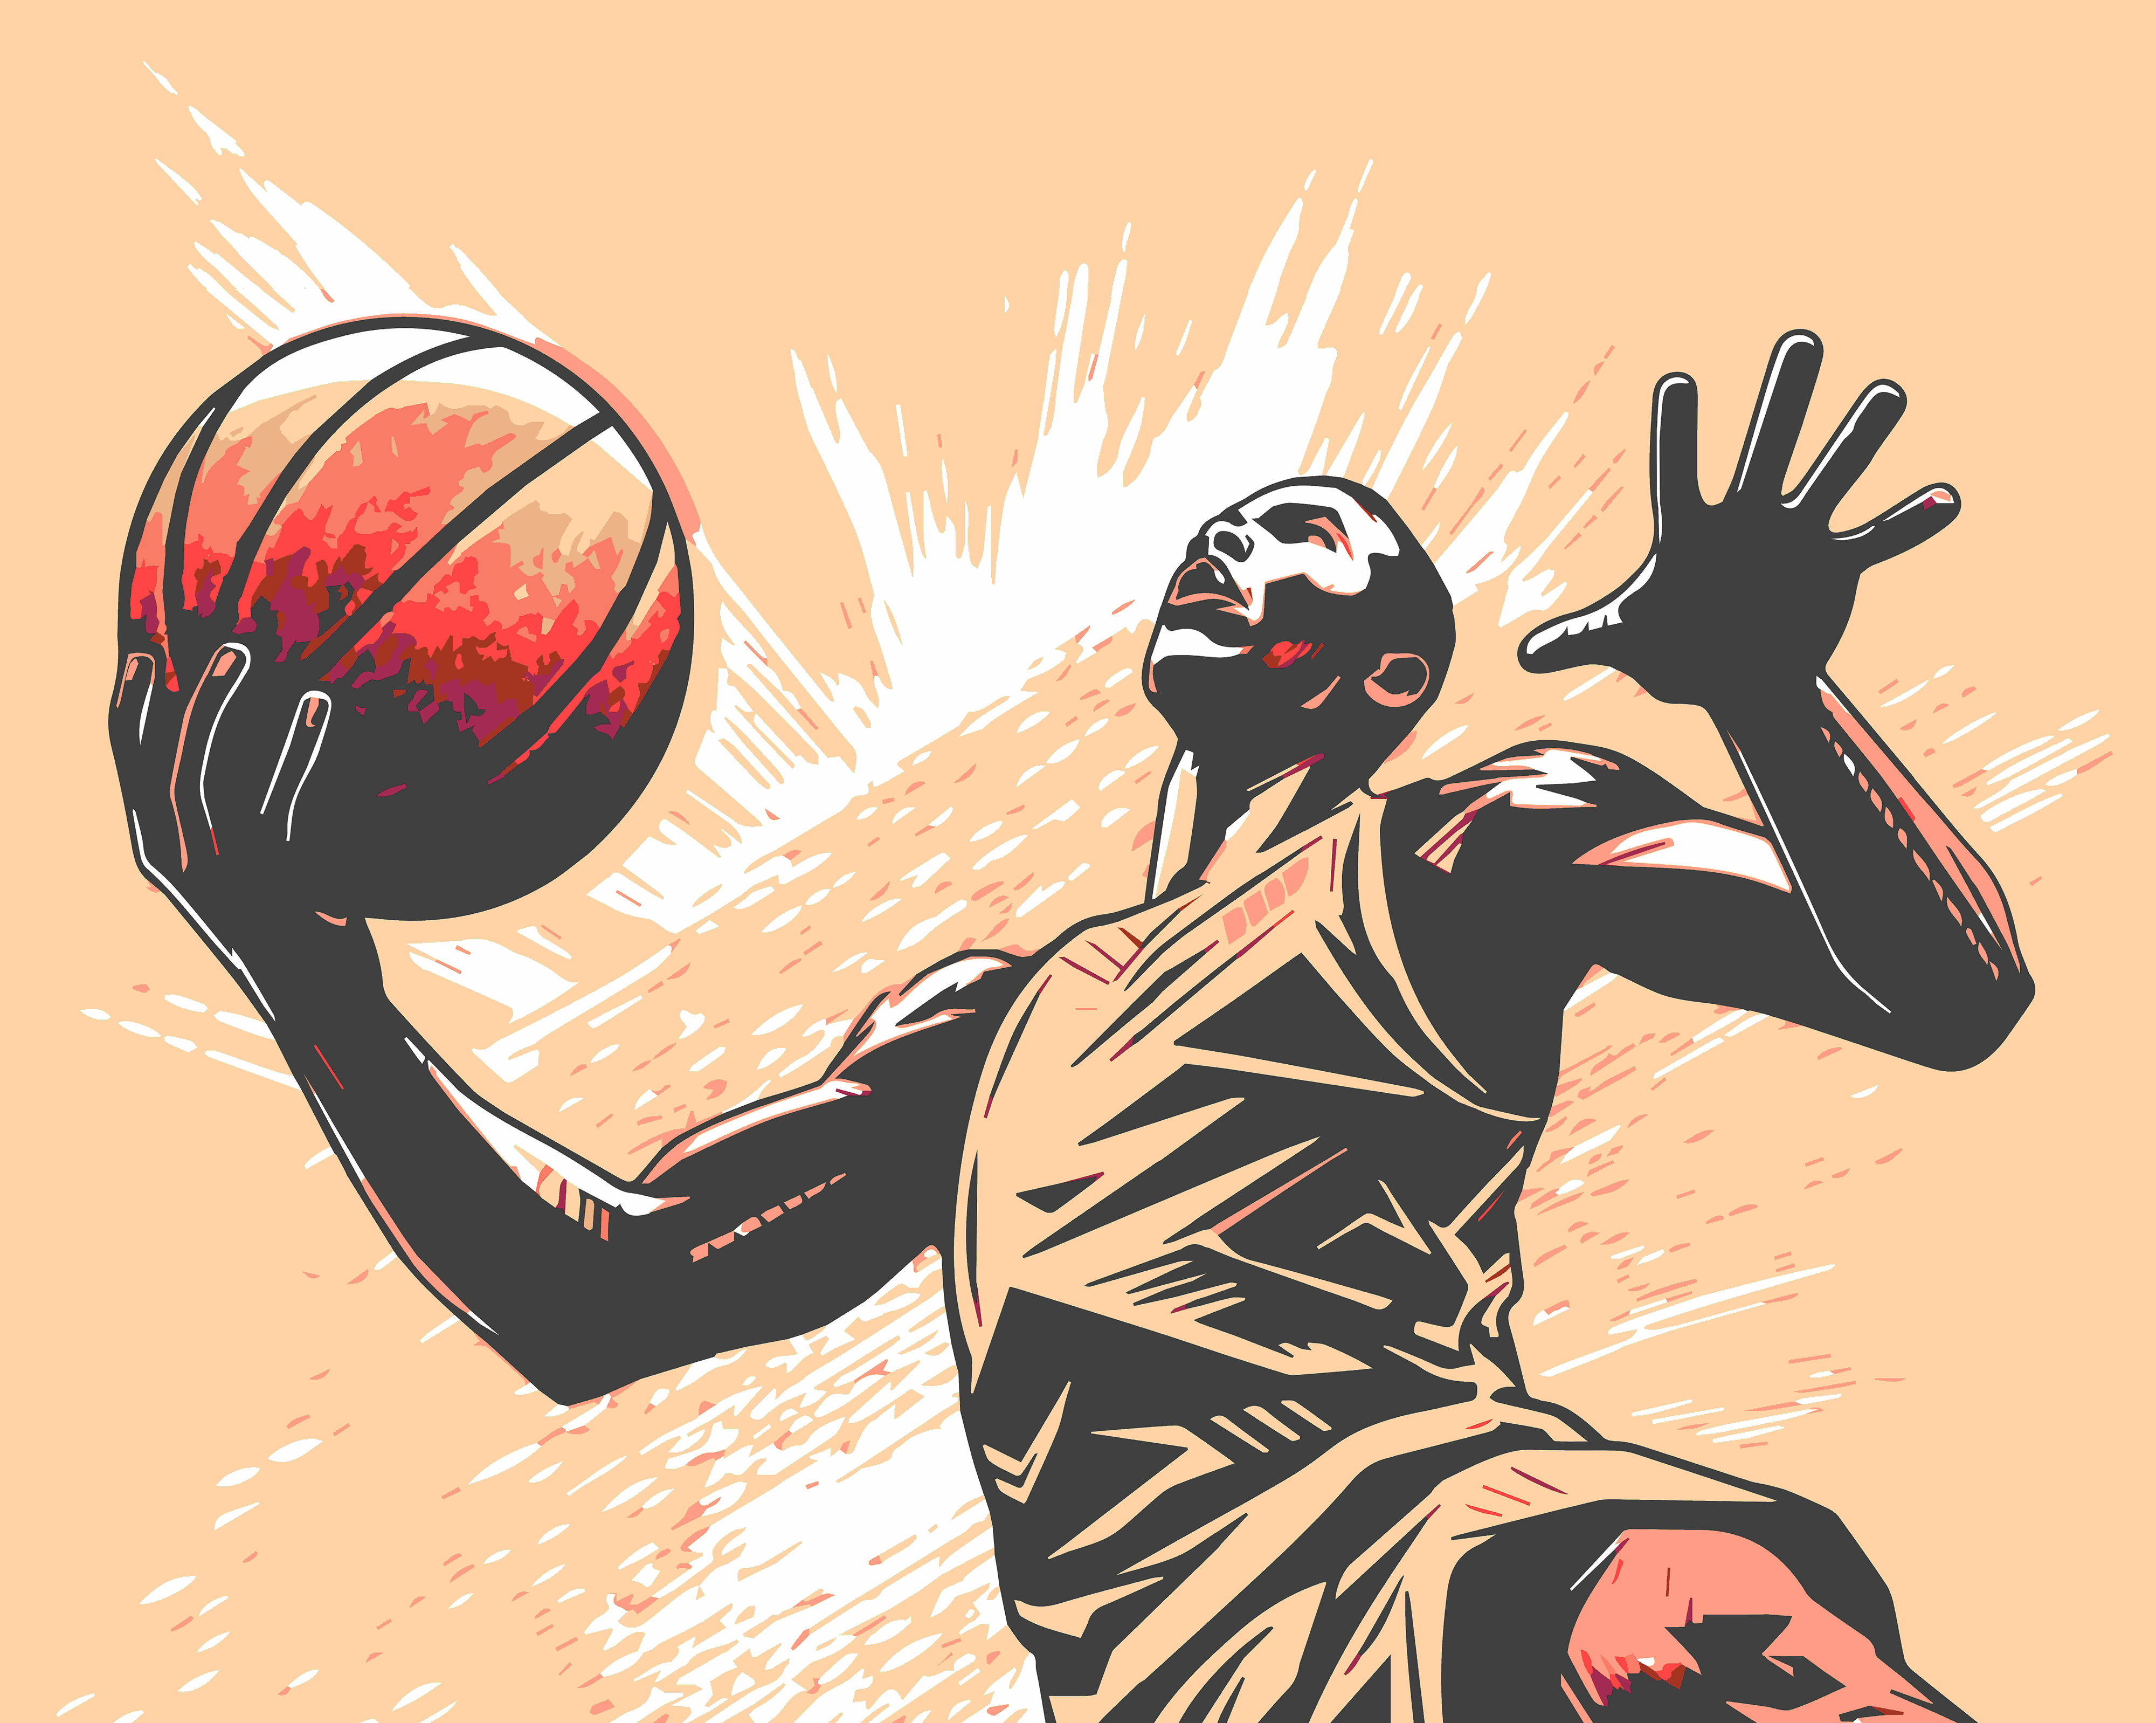 Origin Murals Graphic Basketball Player Orange Wall Mural - 3 x 2.4m